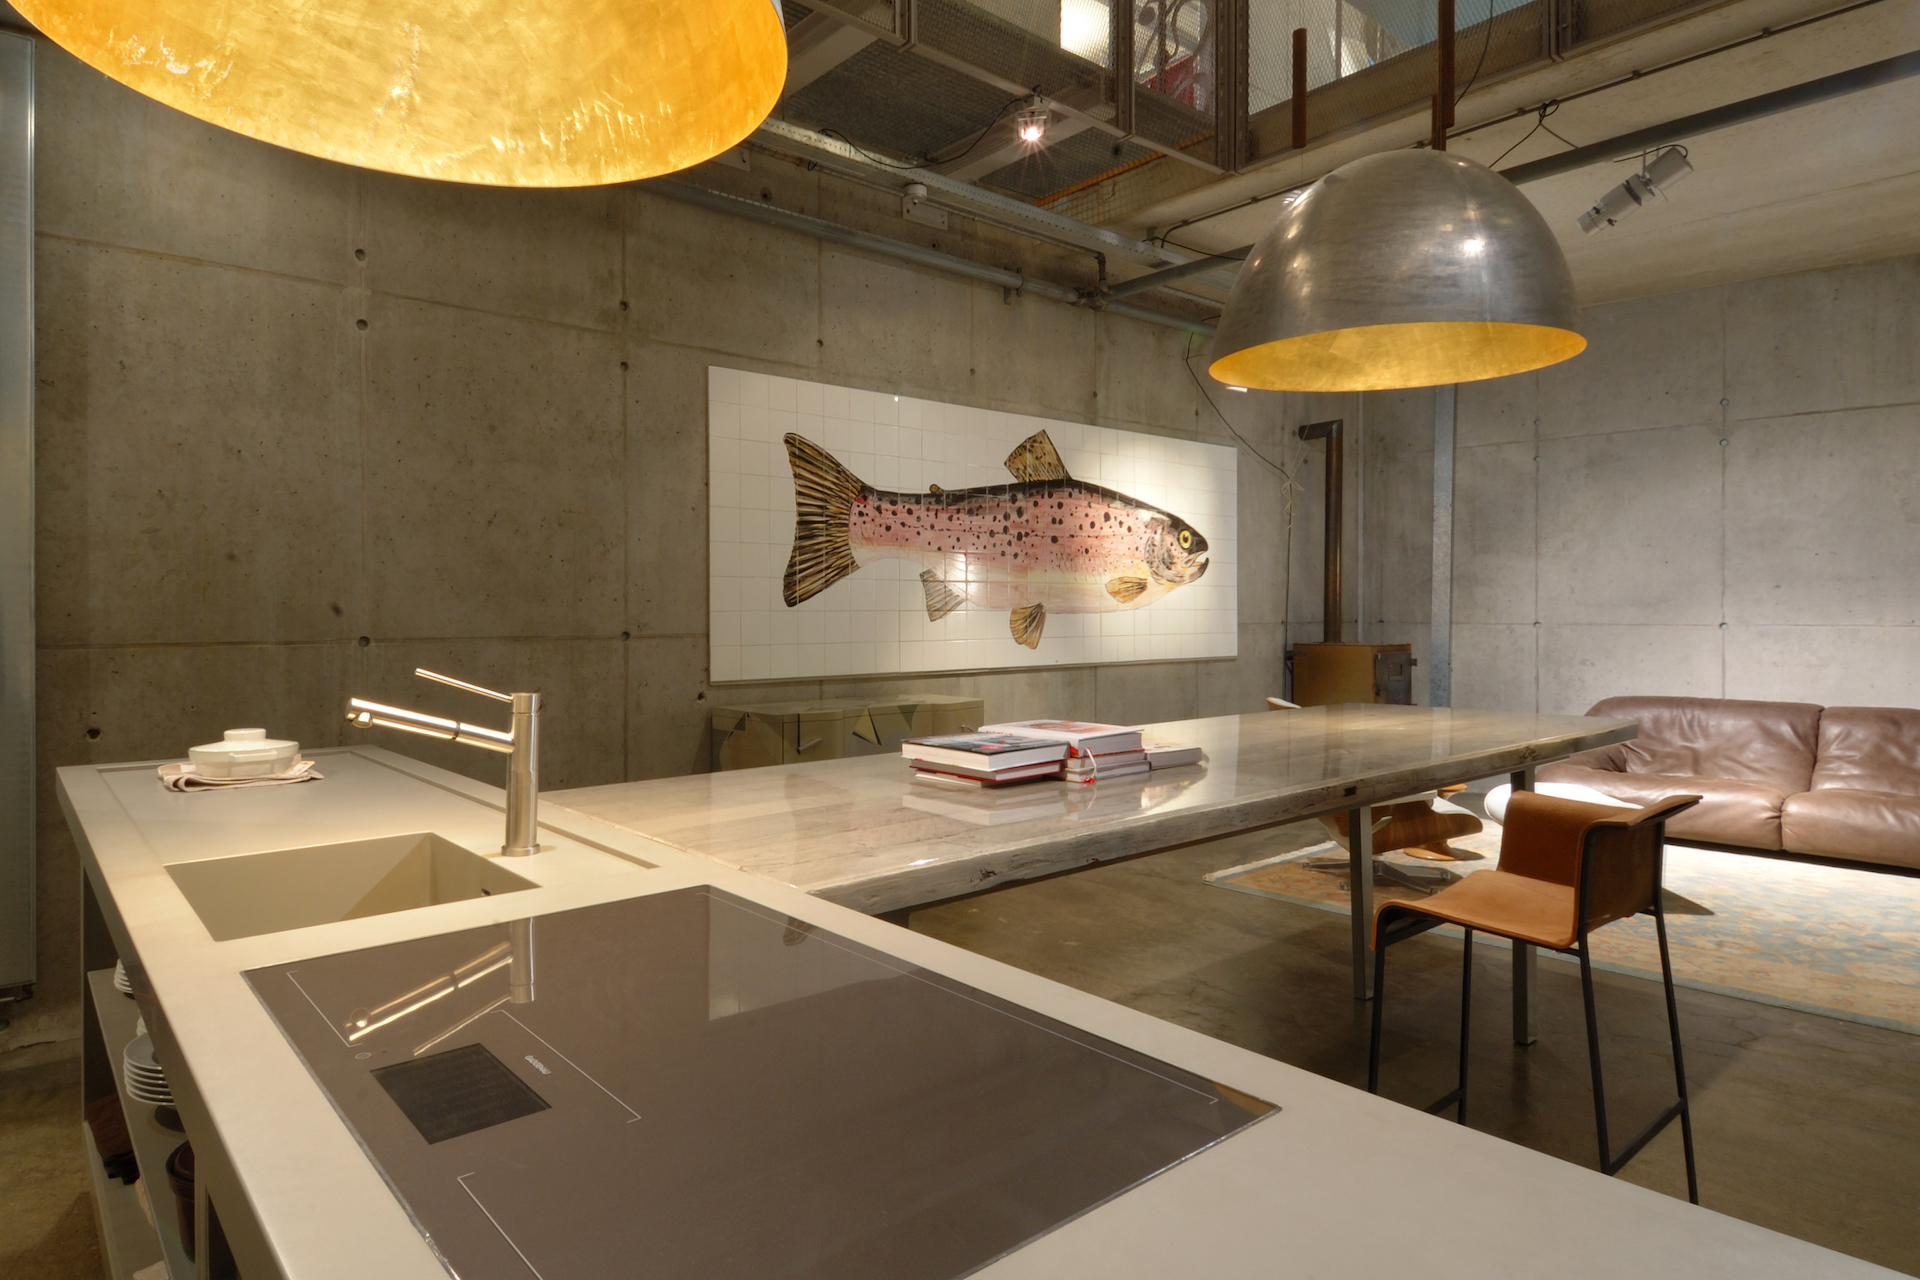 kitchen backsplash tile panel with fish